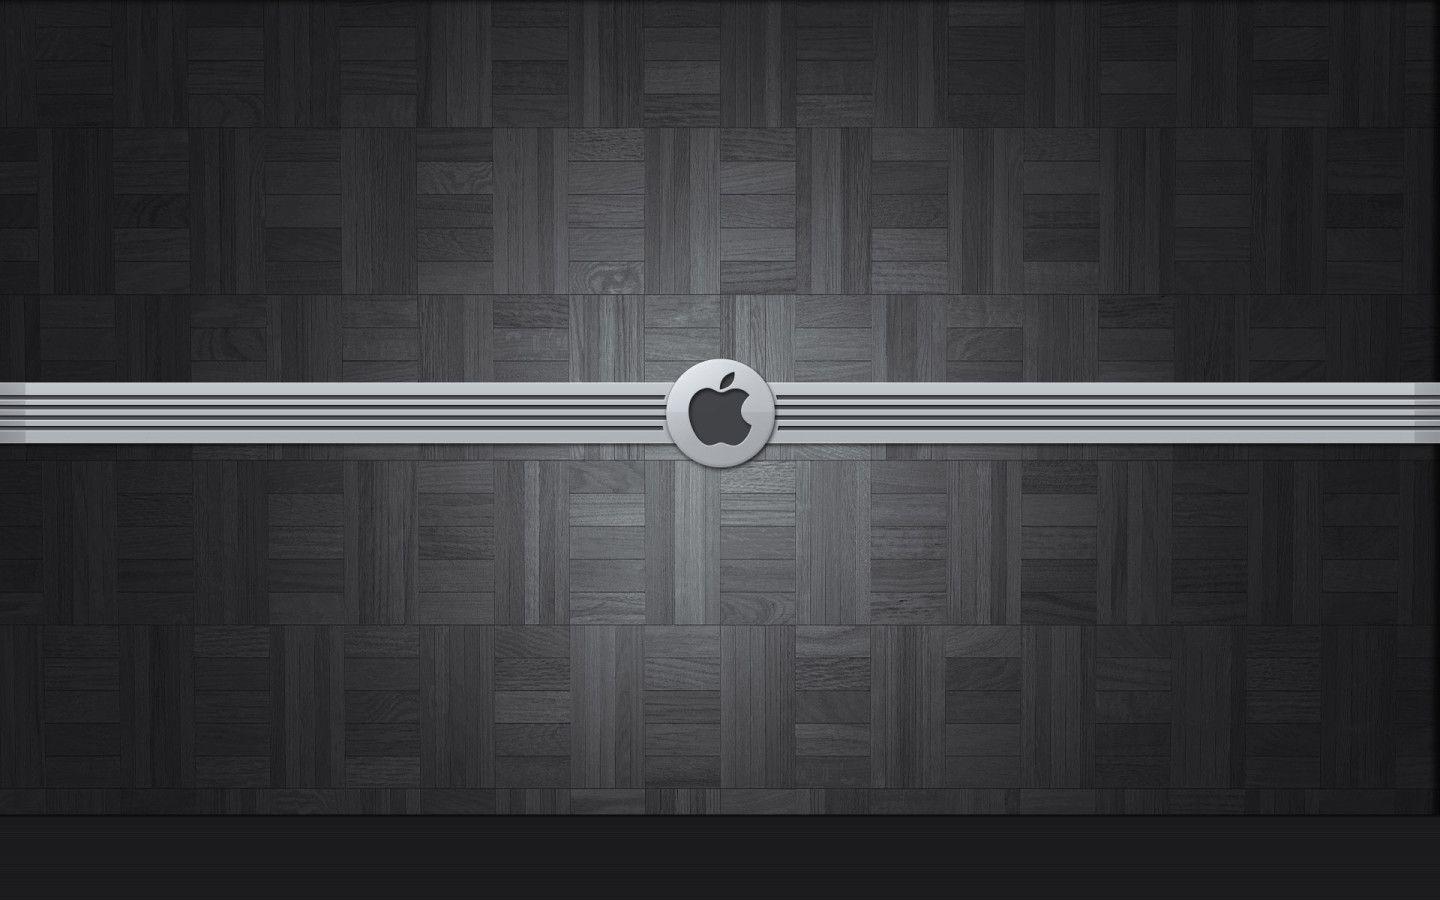 Apple wood background Mac Wallpaper Download. Free Mac Wallpaper